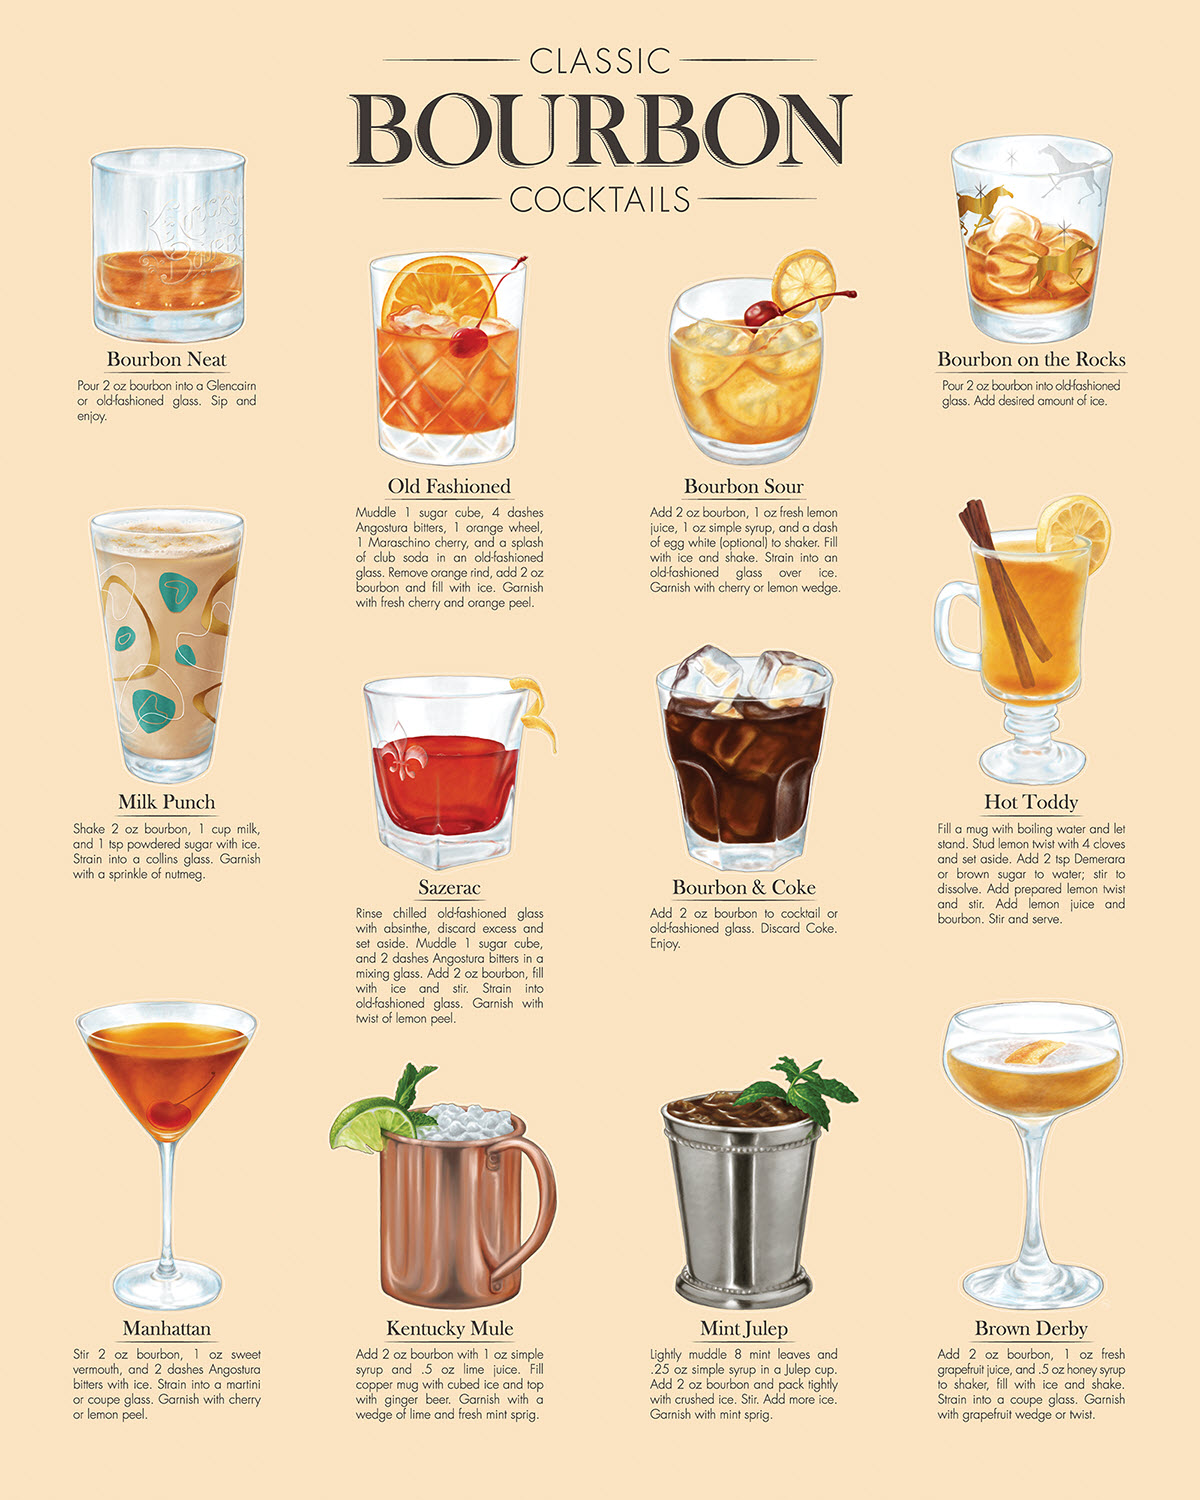 https://www.distillerytrail.com/wp-content/uploads/2016/09/Classic-Bourbon-Cocktails-Infographic.jpg